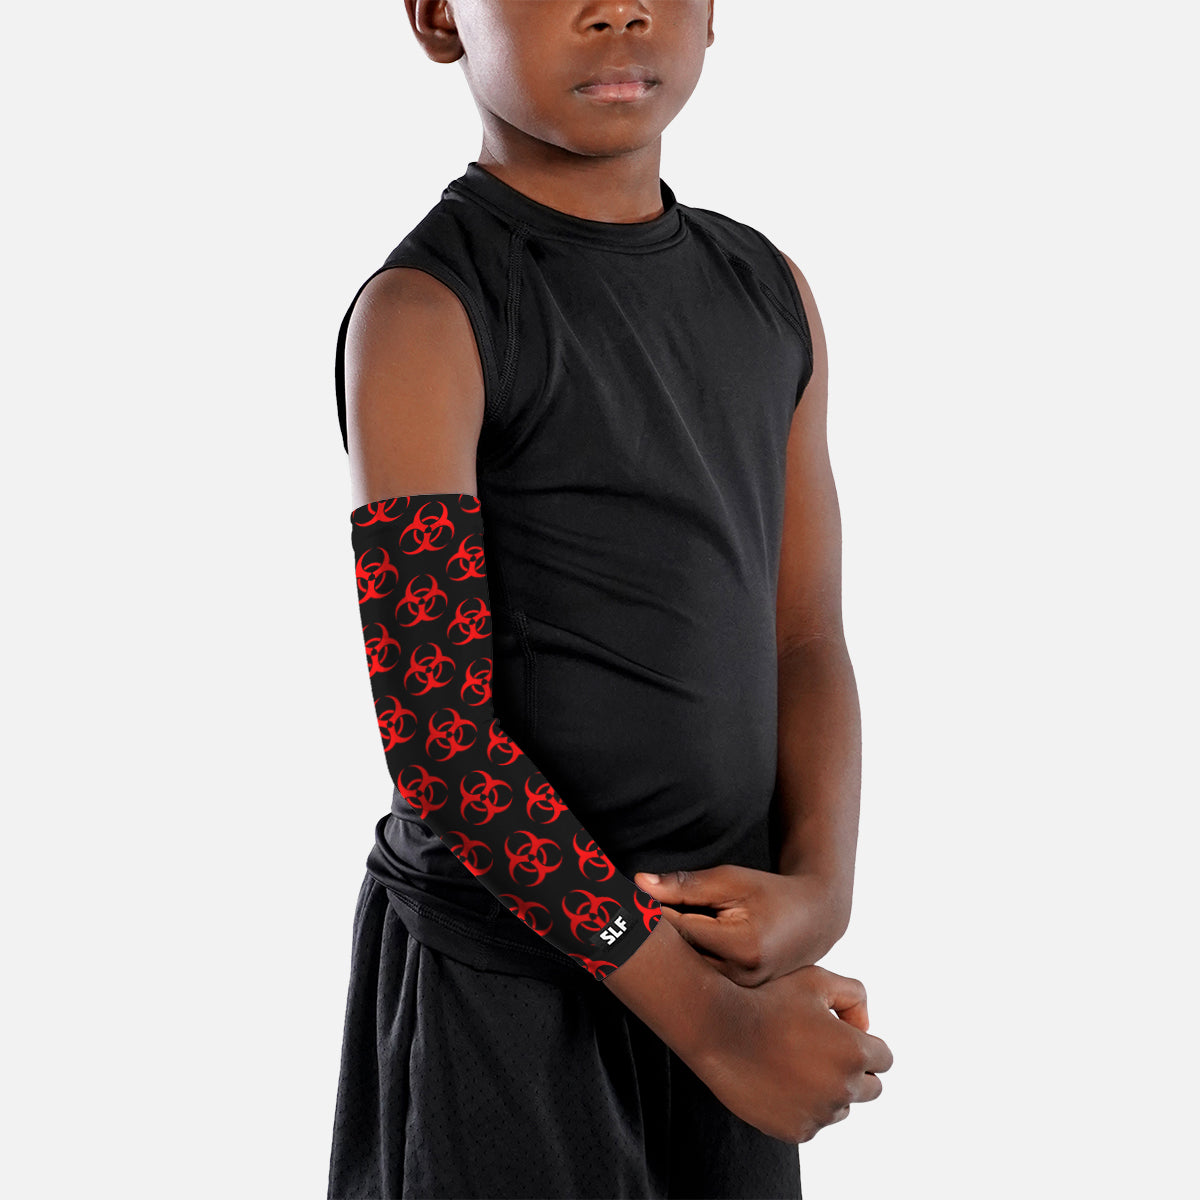 Biohazard Red Pattern Kids Arm Sleeve